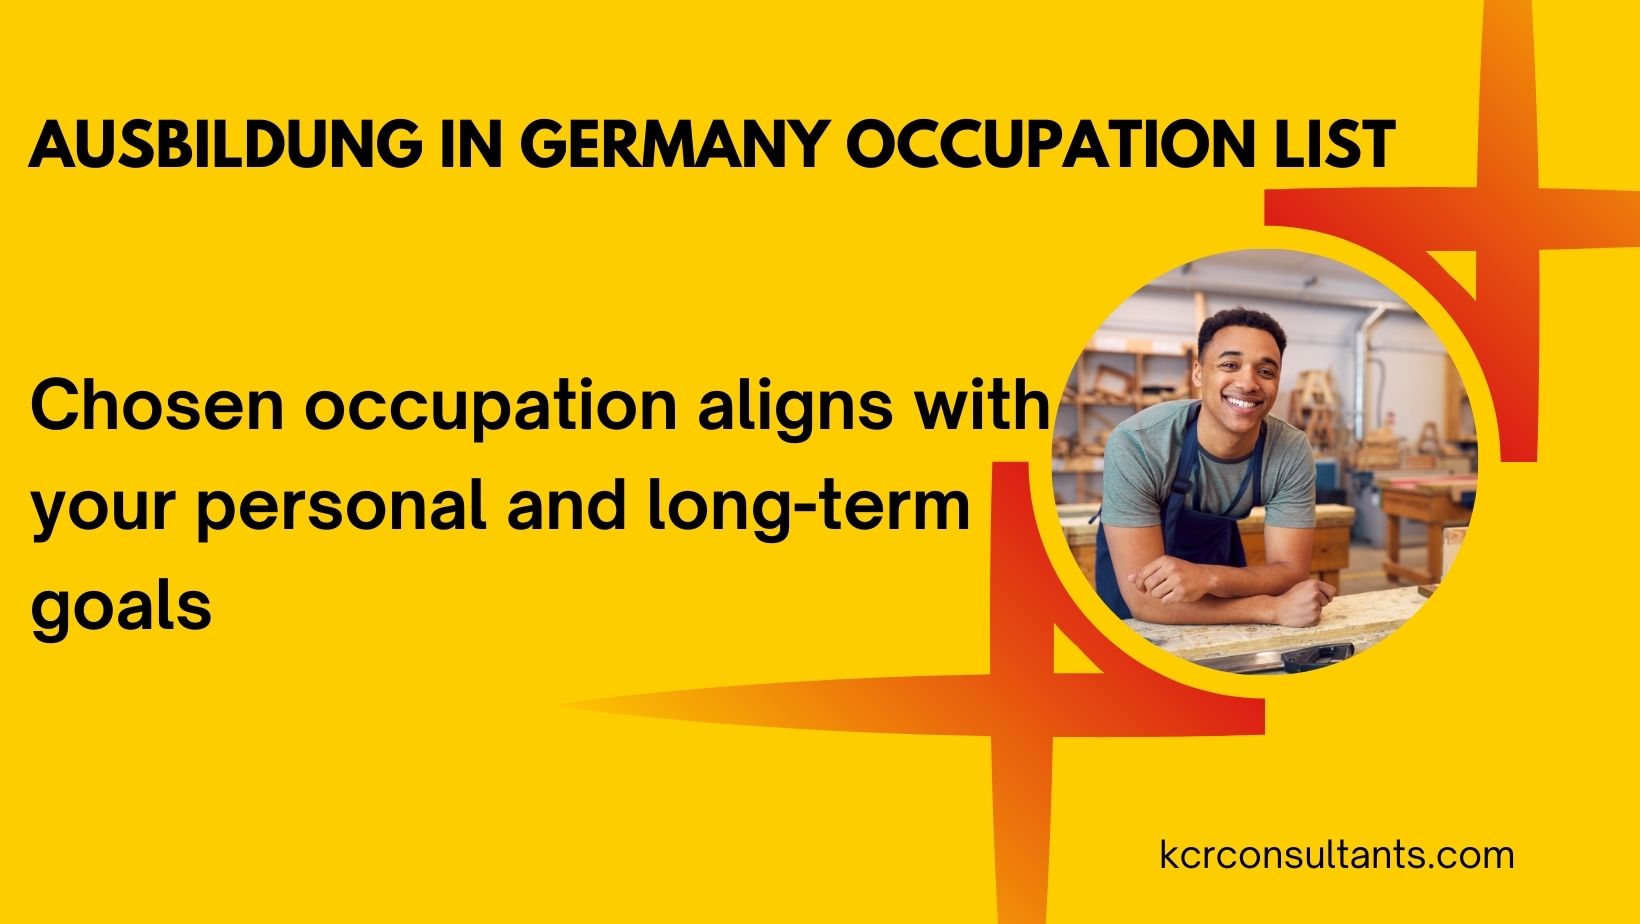 Ausbildung occupation list - KCR CONSULTANTS - Introduction